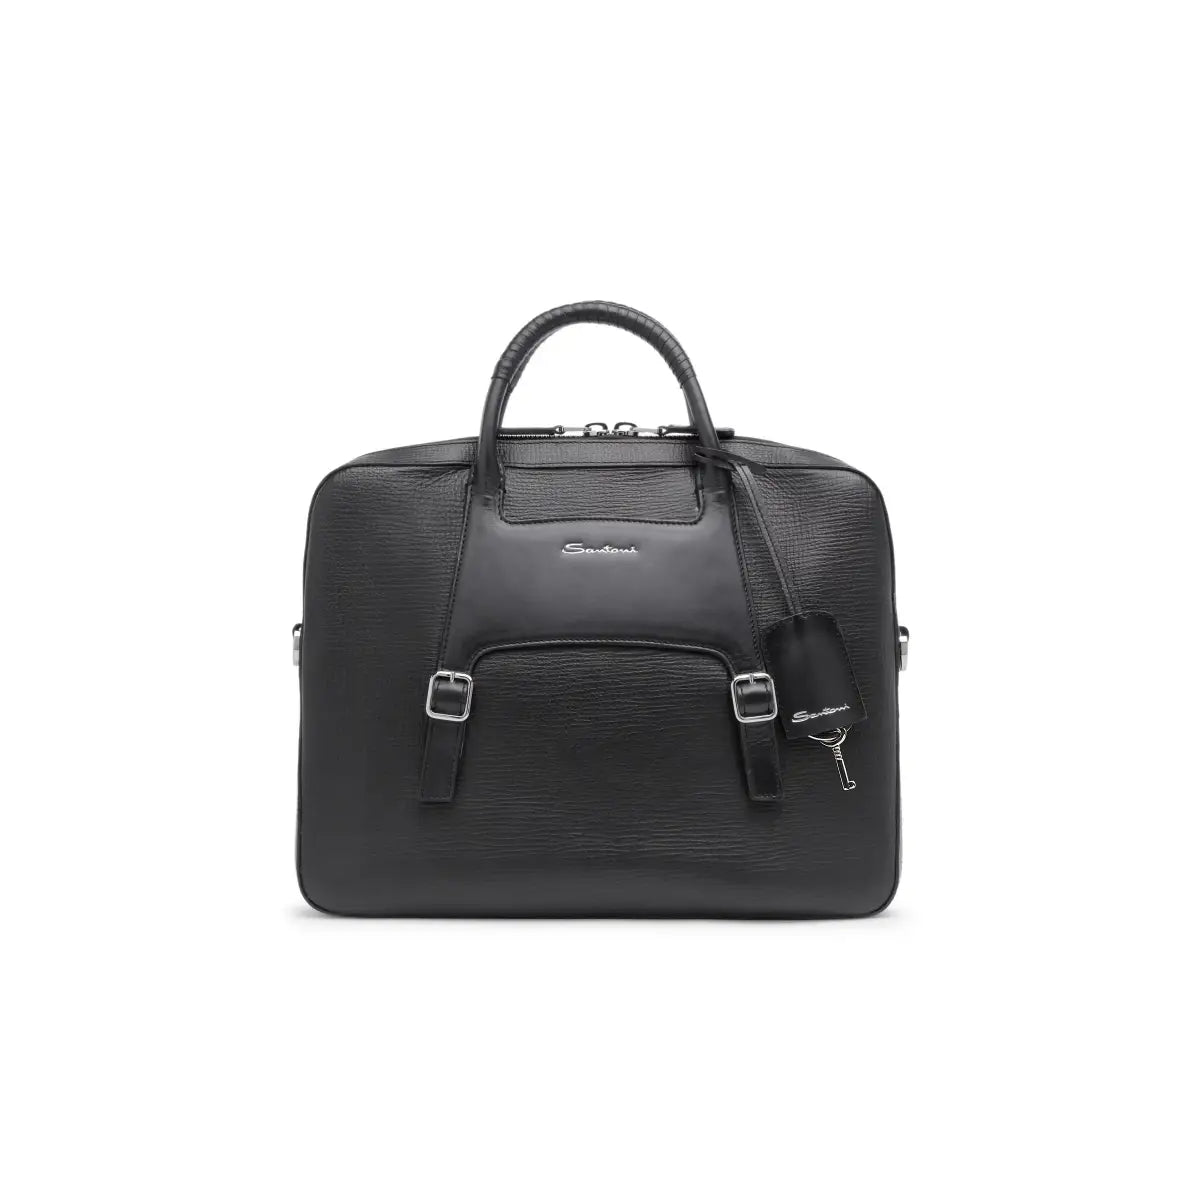 Santoni briefcase black leather. side view.